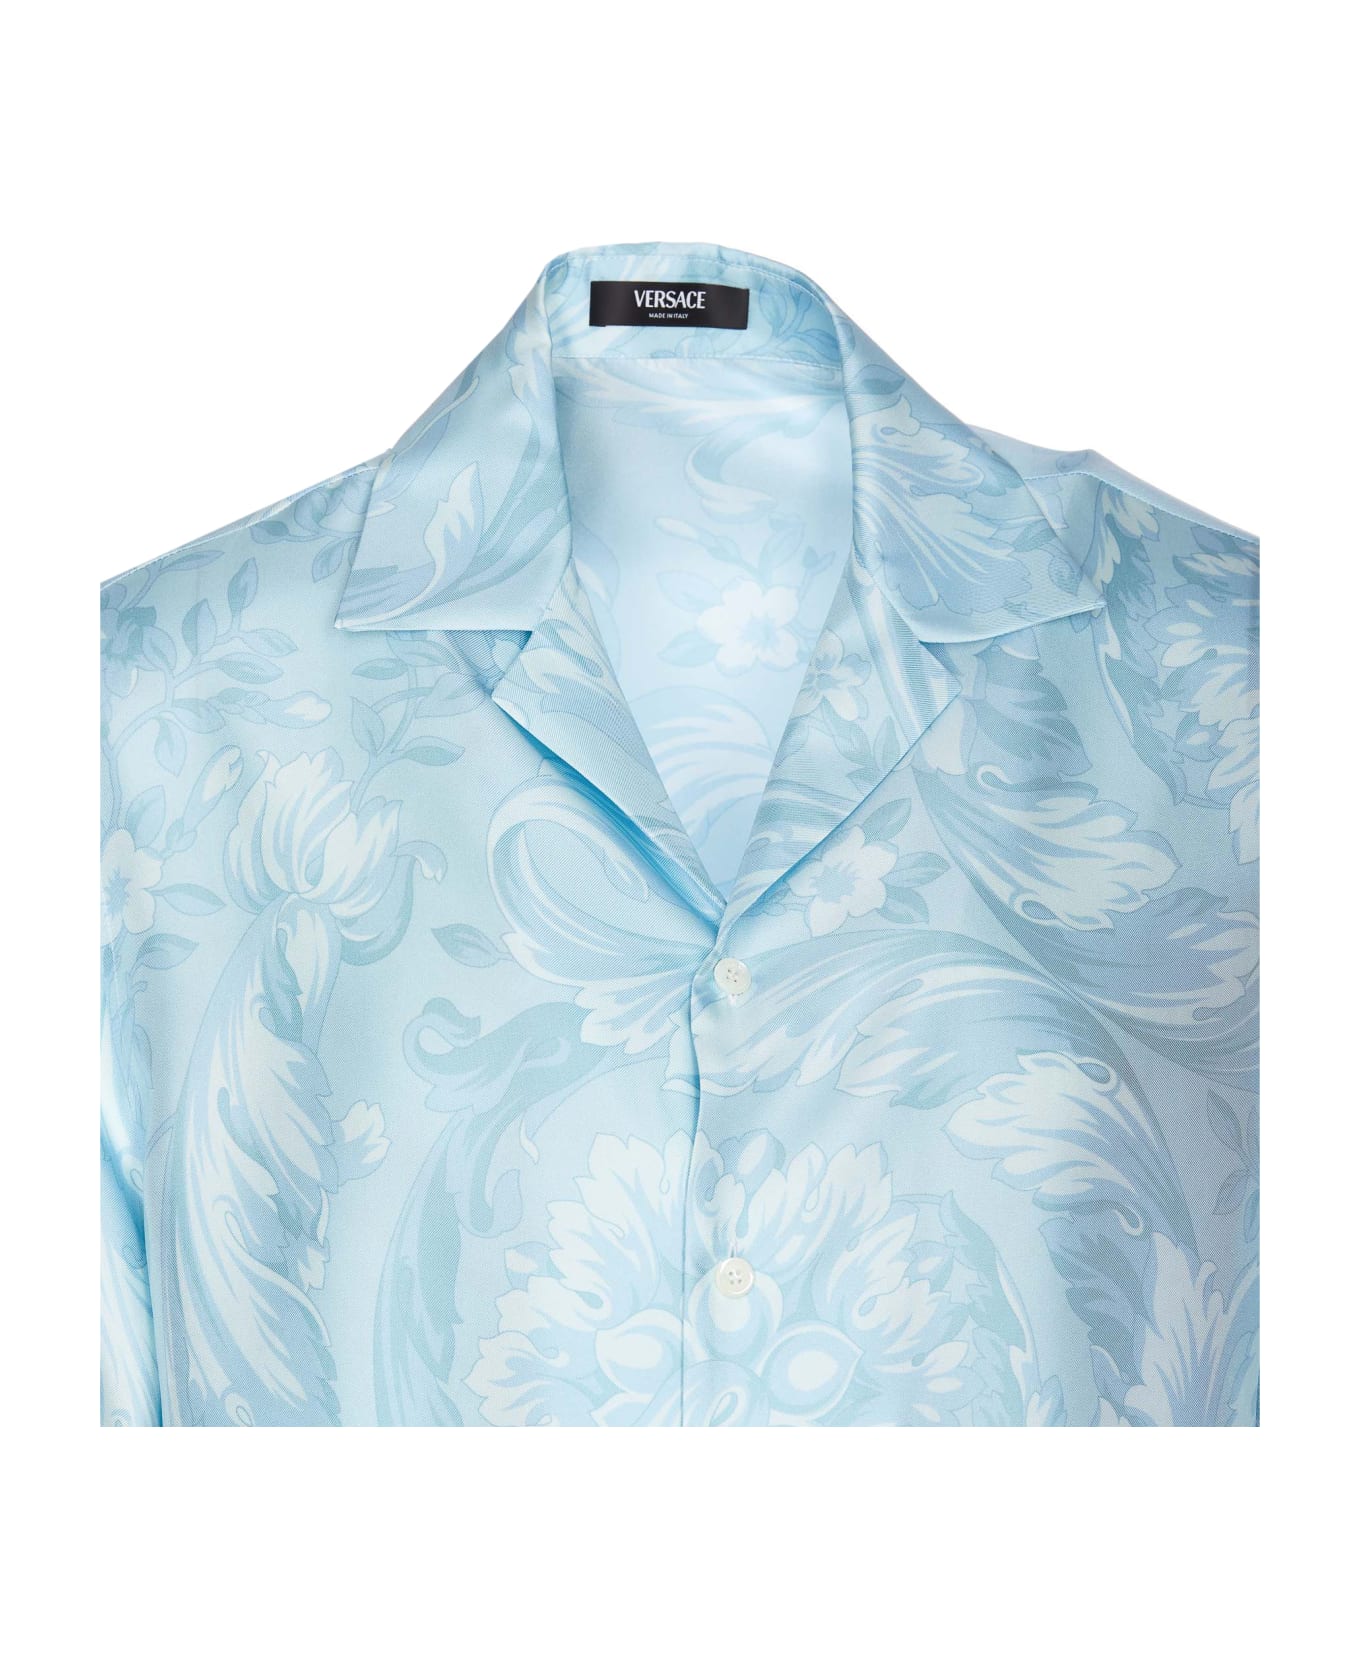 Versace Barocco Shirt - Pale blue